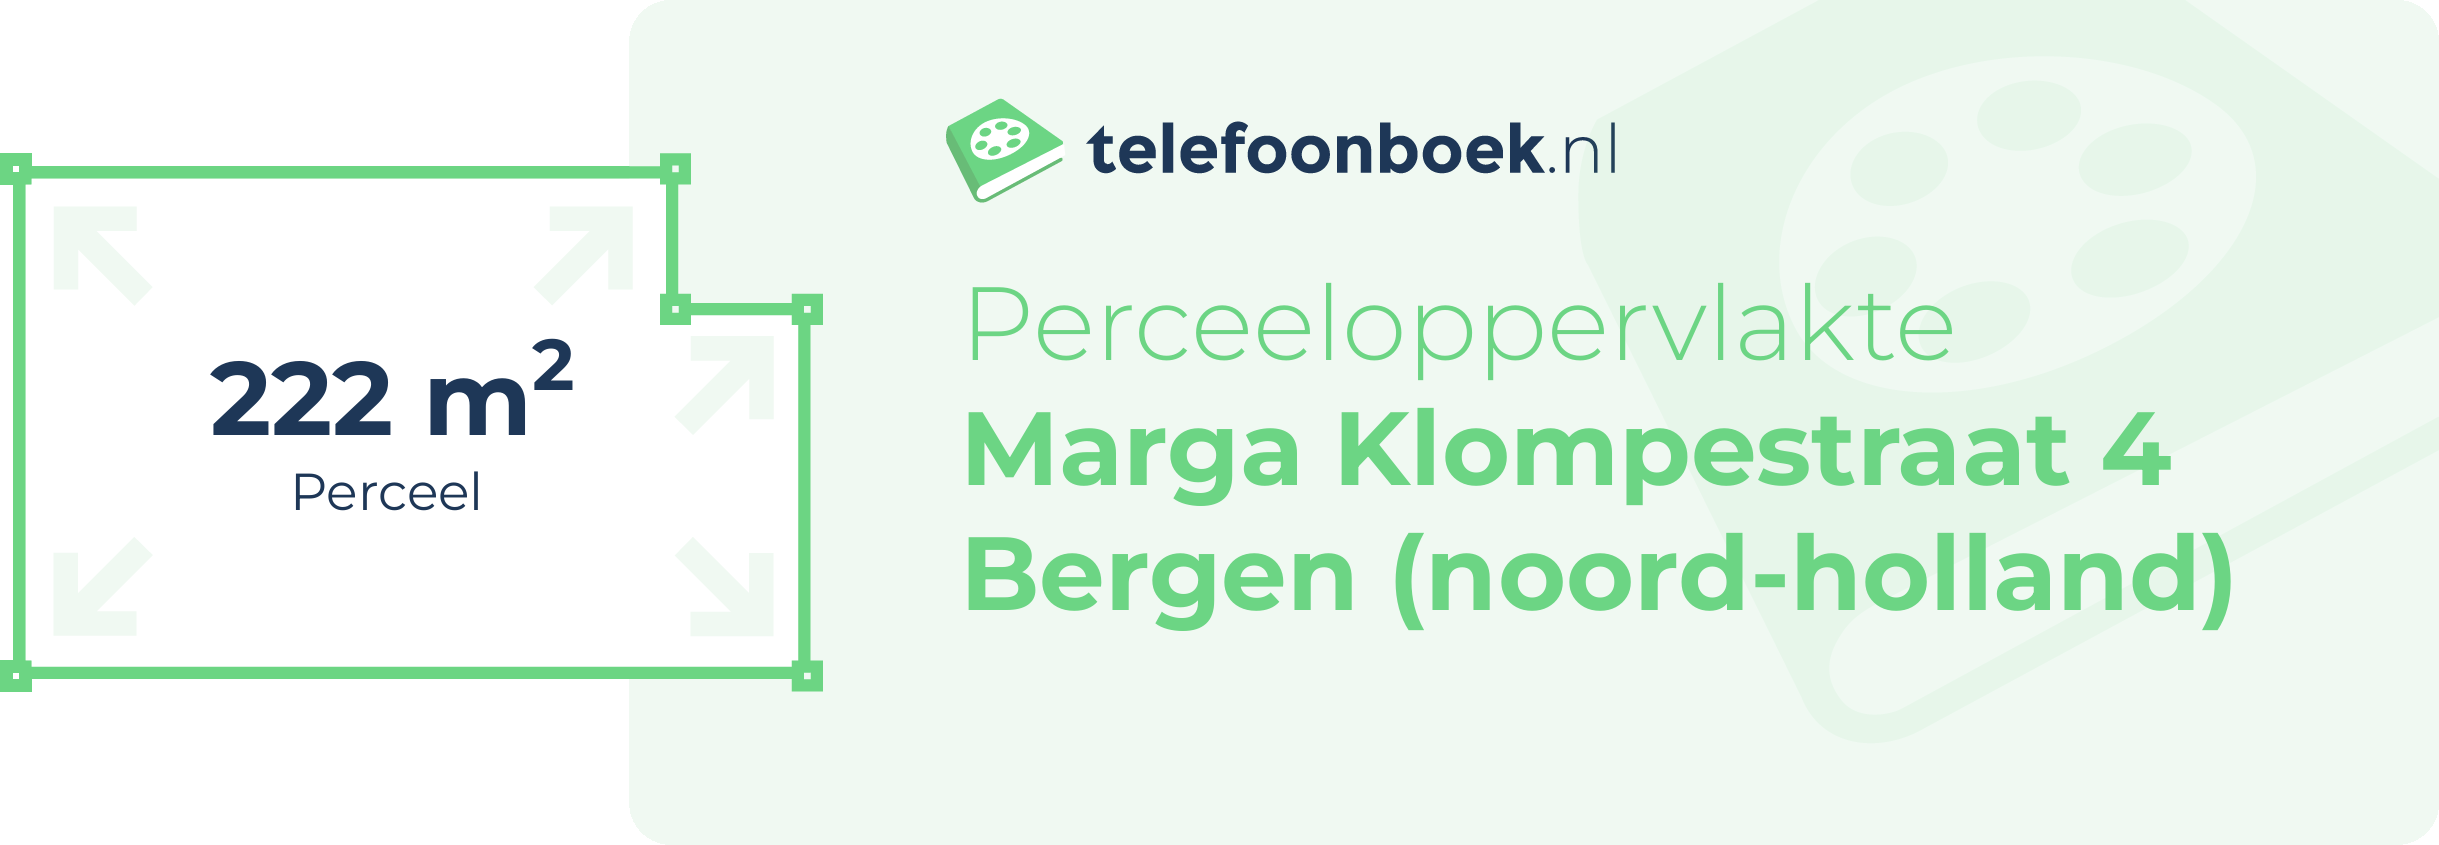 Perceeloppervlakte Marga Klompestraat 4 Bergen (Noord-Holland)